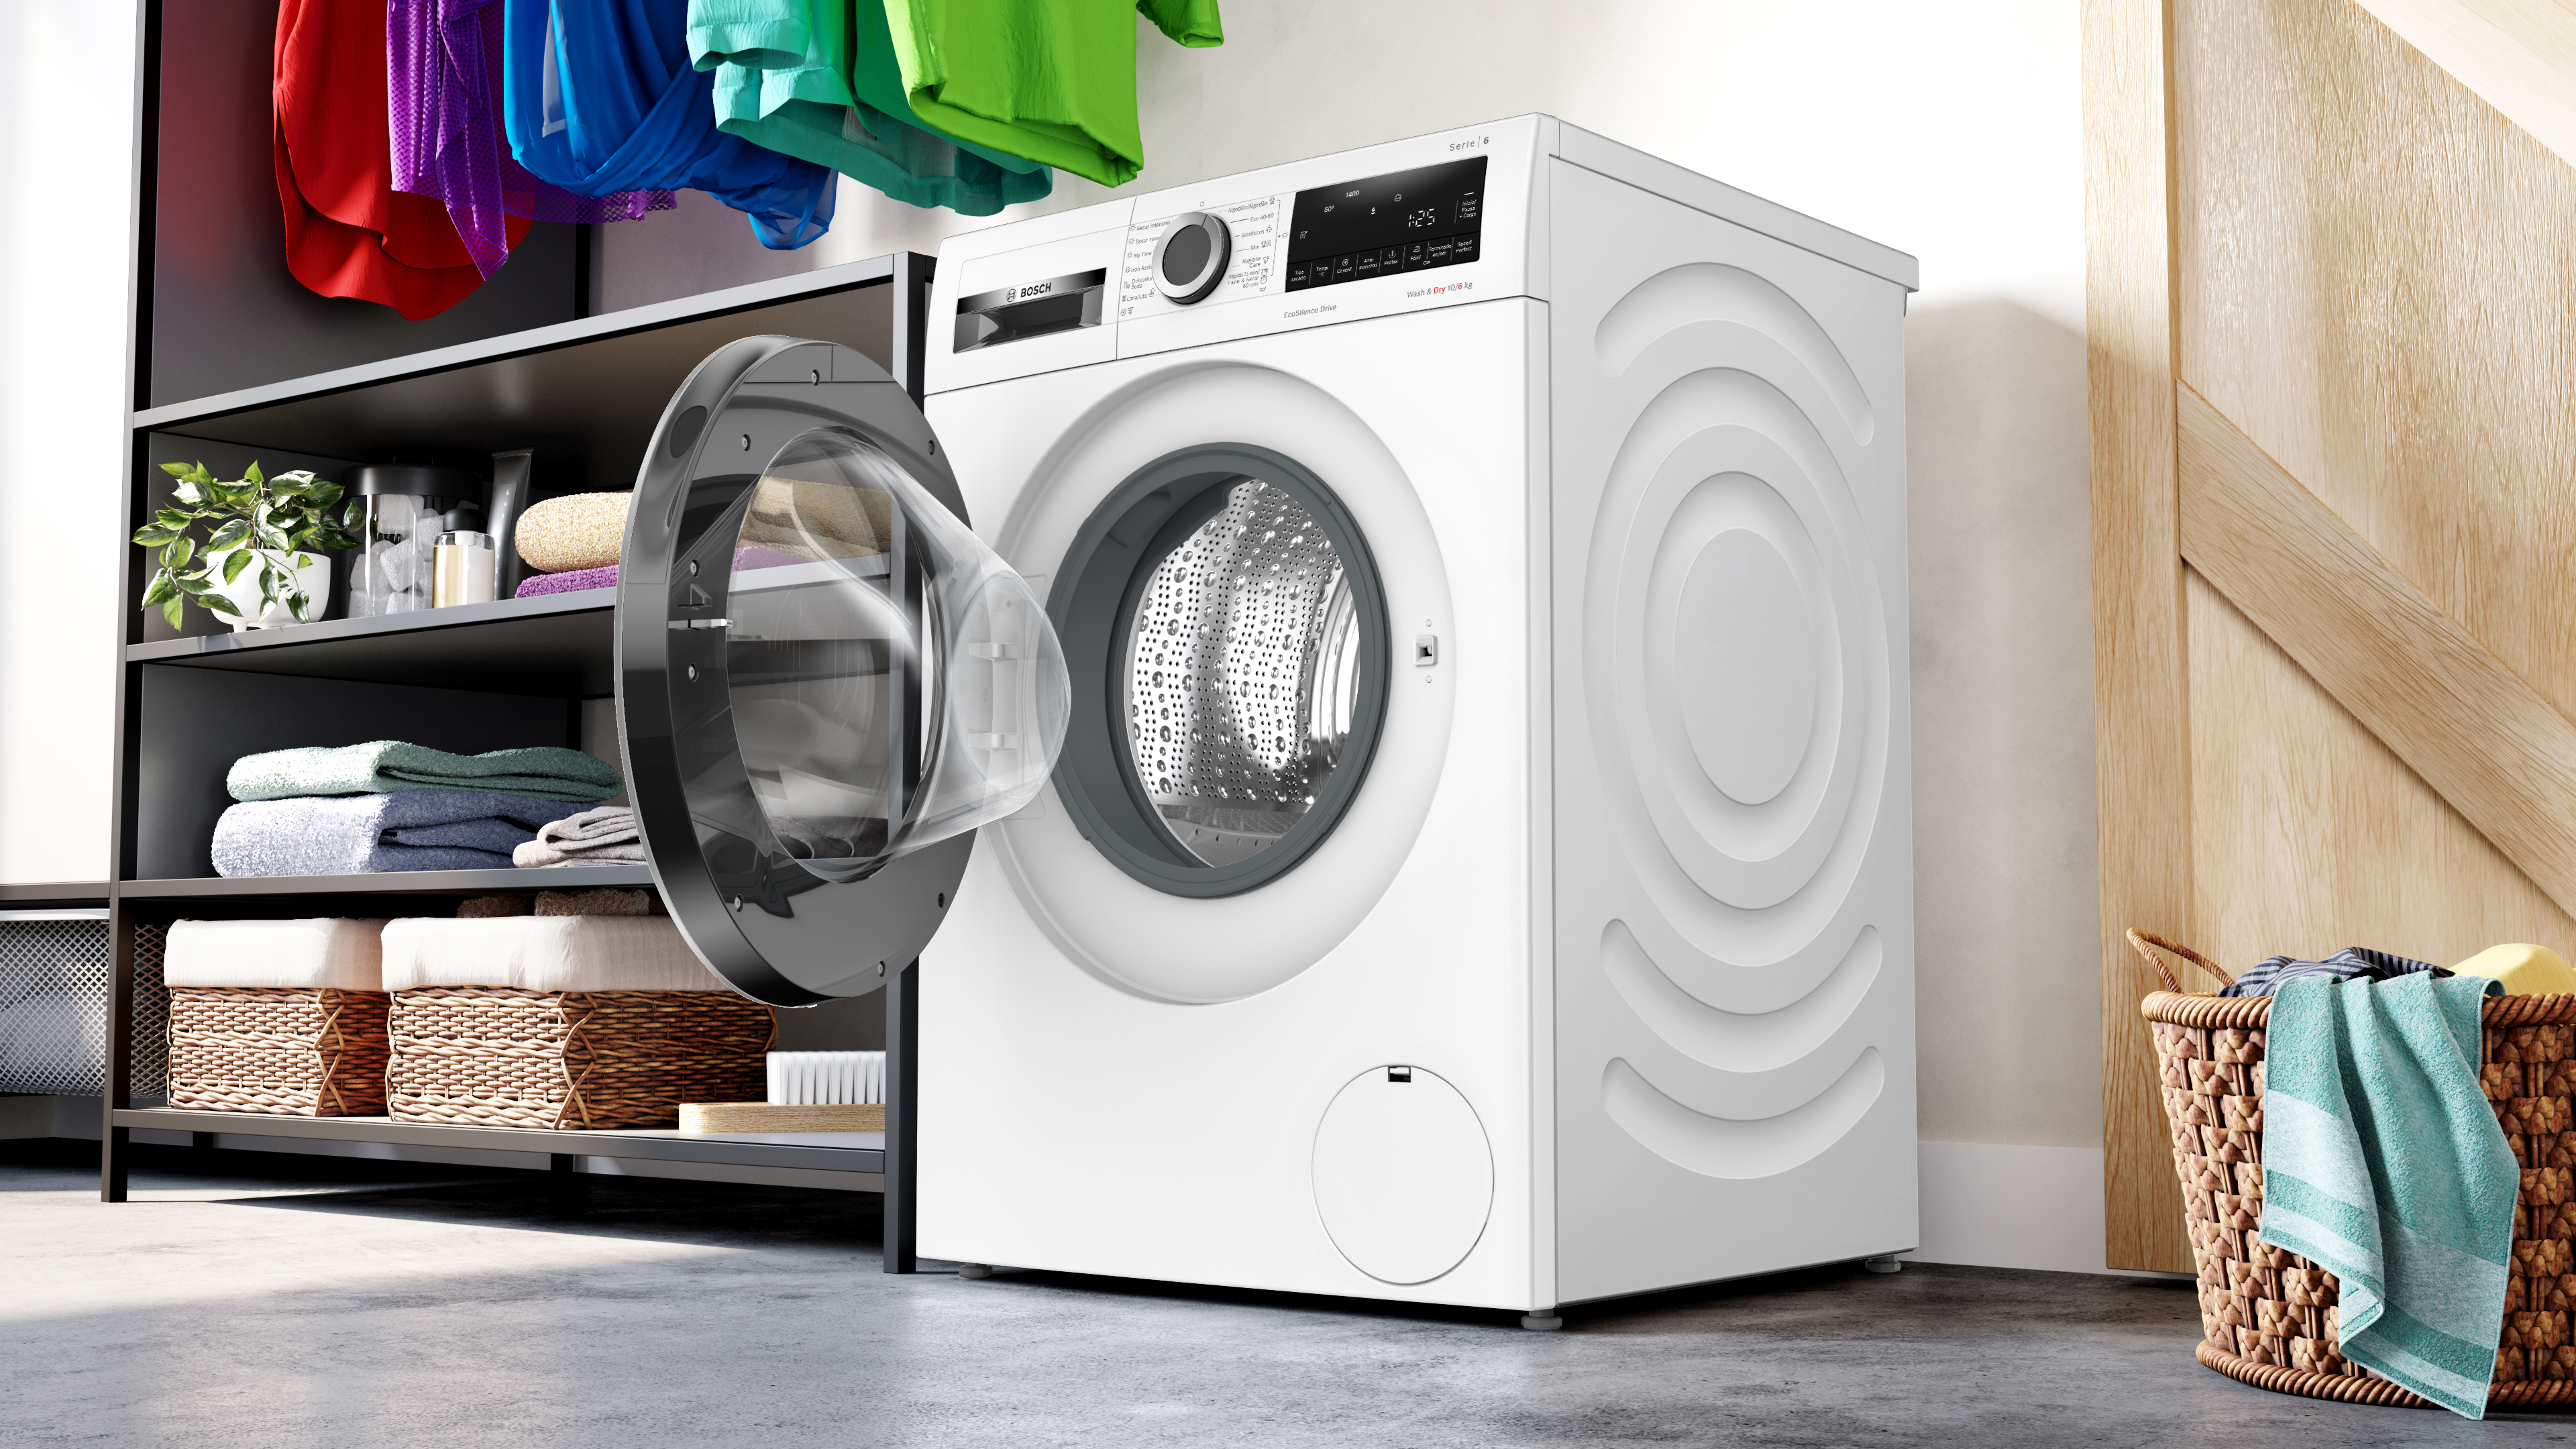 Lavadora secadora - Bosch WNG25400ES, 10 kg/6 kg, 1400 rpm, Motor EcoS –  Join Banana